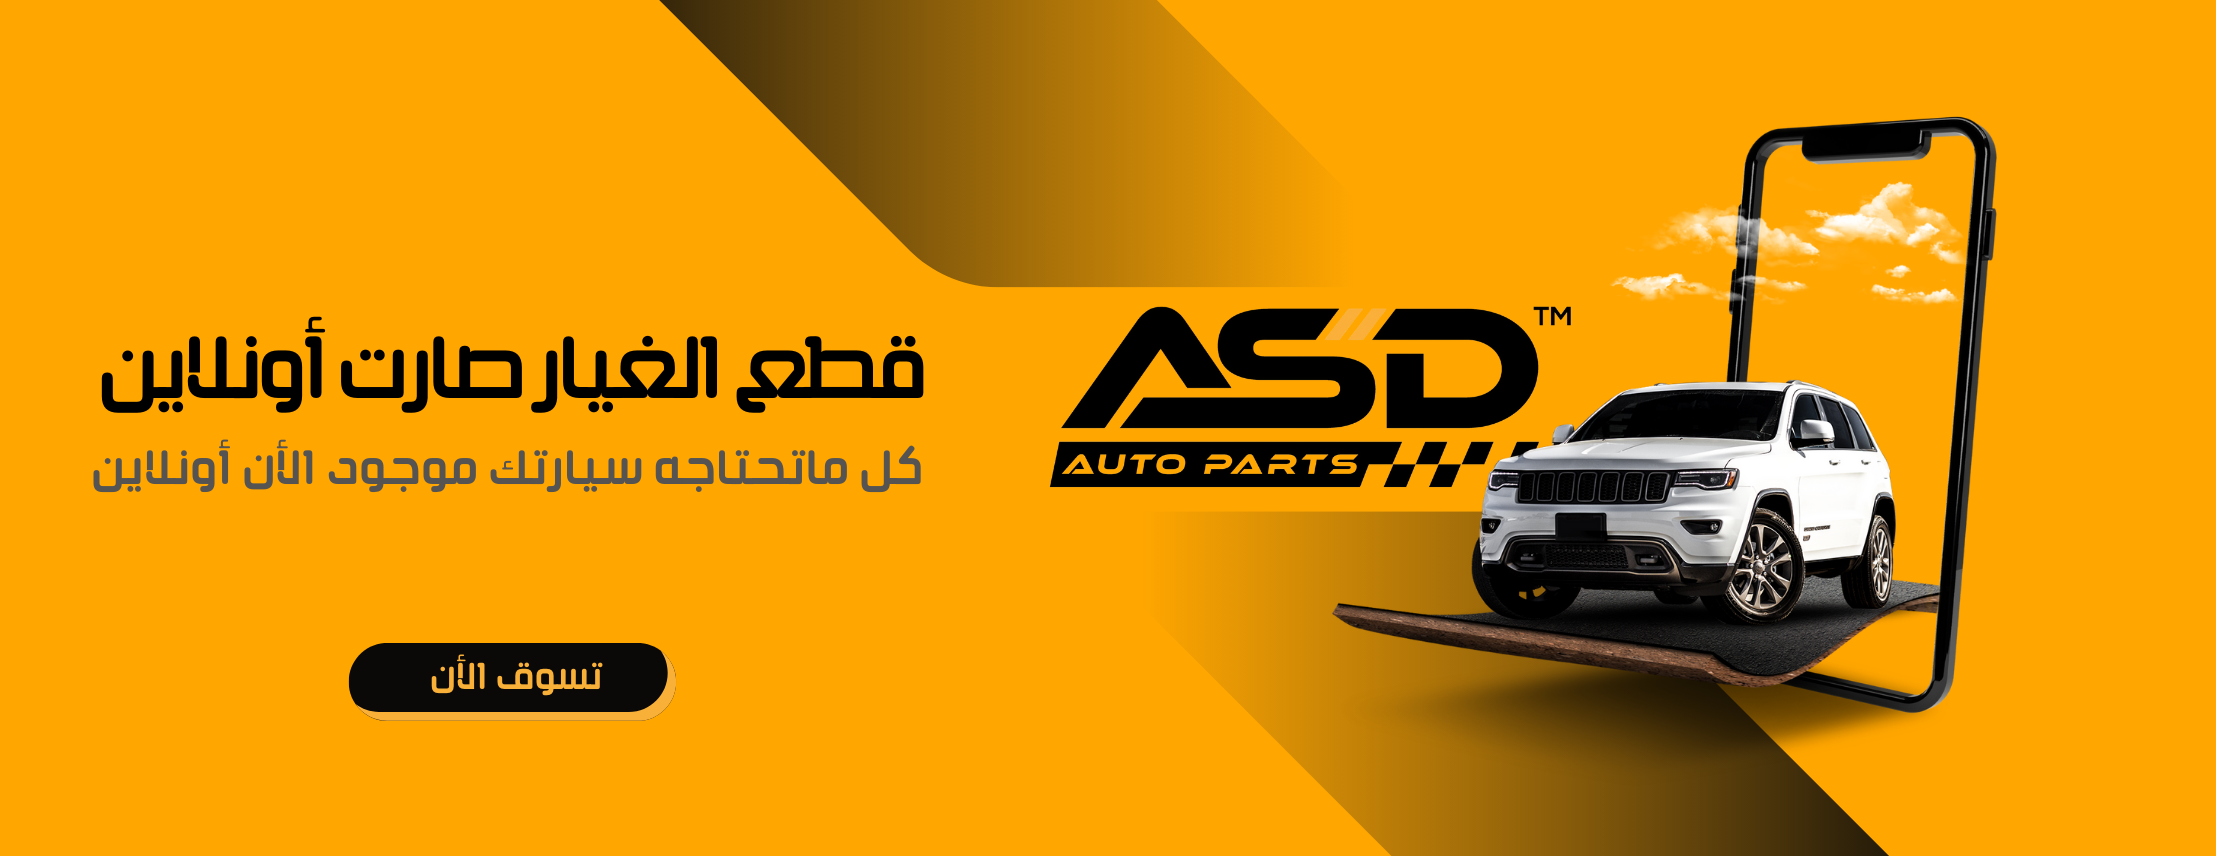 ASD Auto Parts image-slider-0